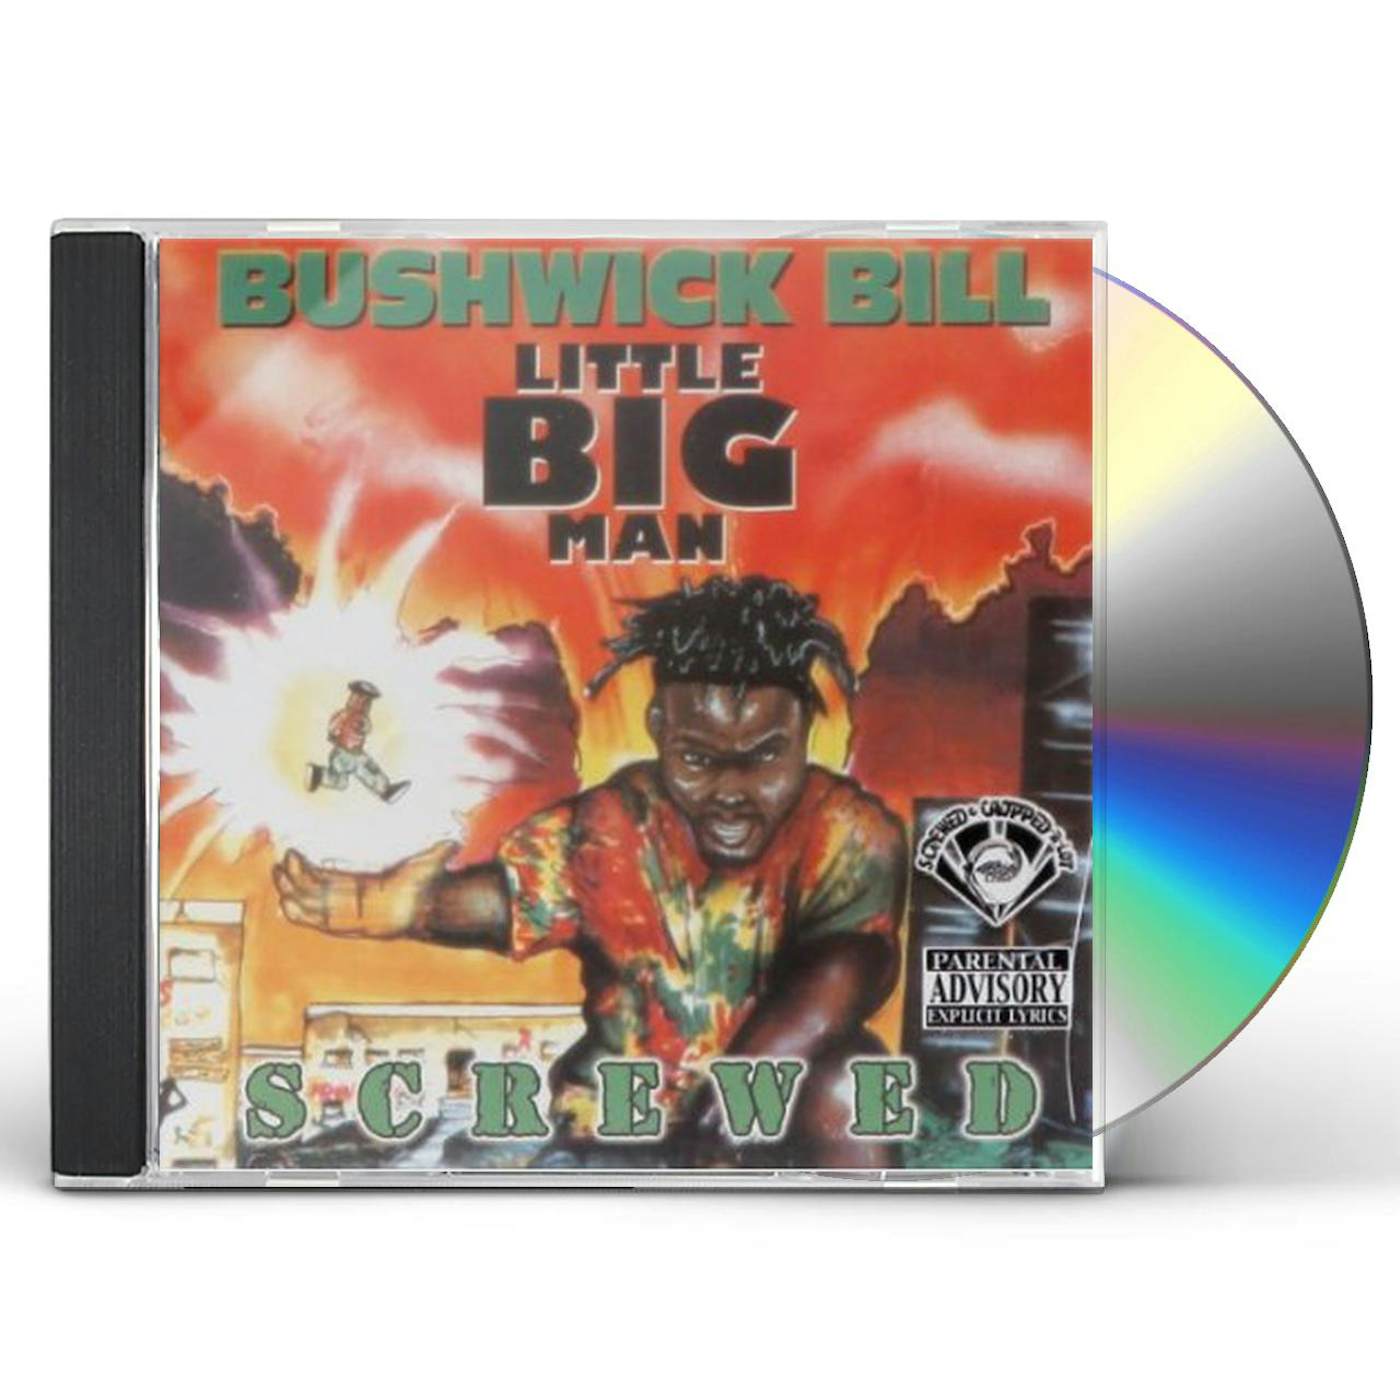 Bushwick Bill LITTLE BIG MAN CD